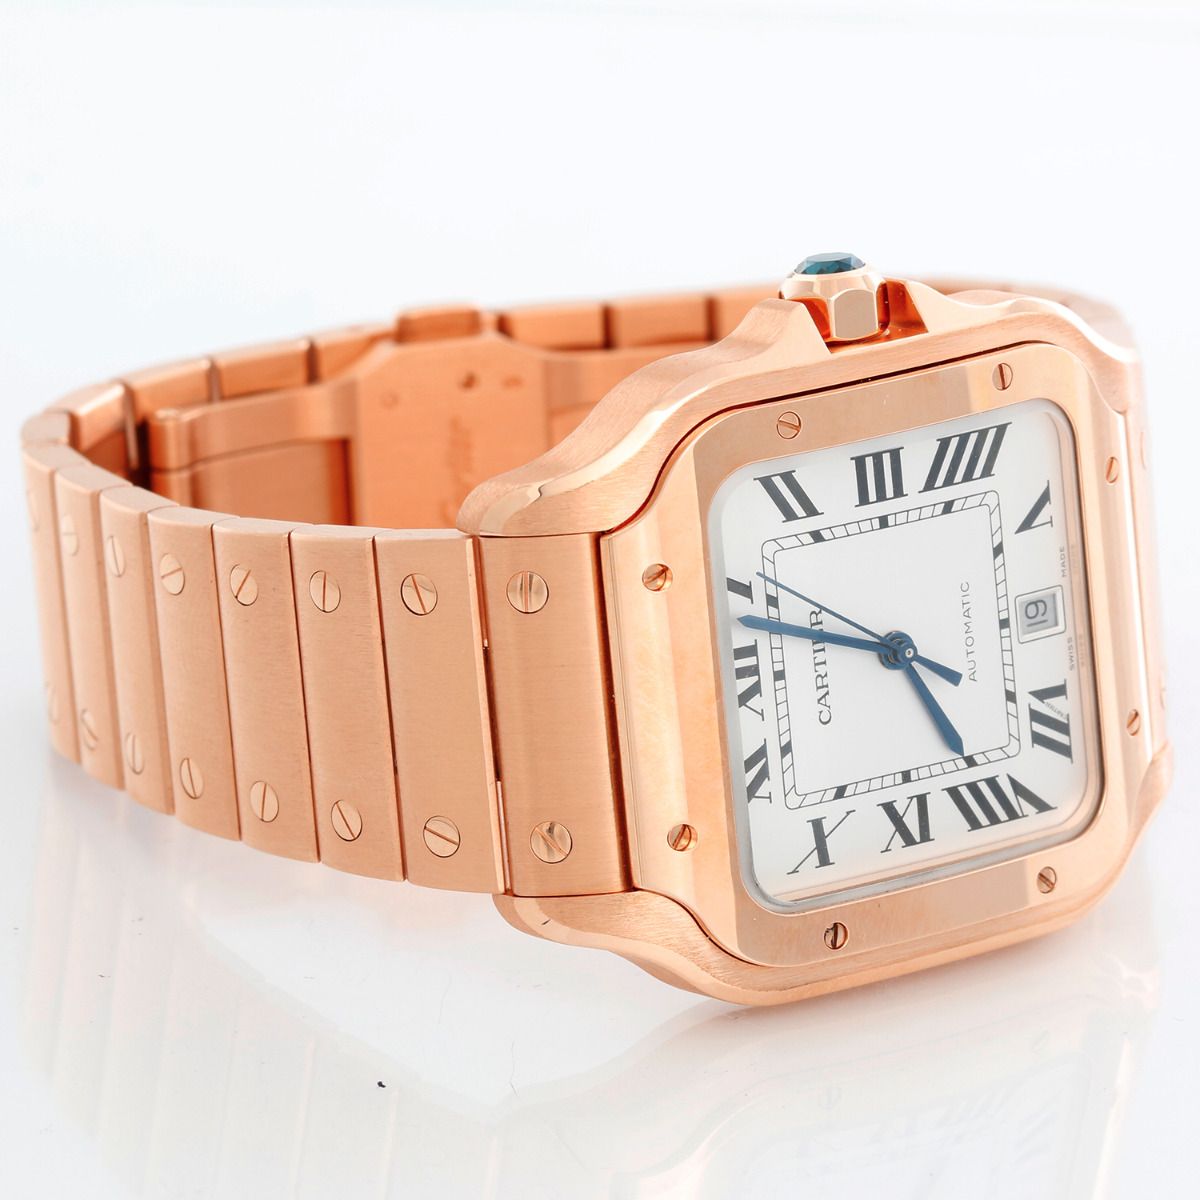 Cartier Santos 18K Rose Gold Large Men's Watch WGSA0018